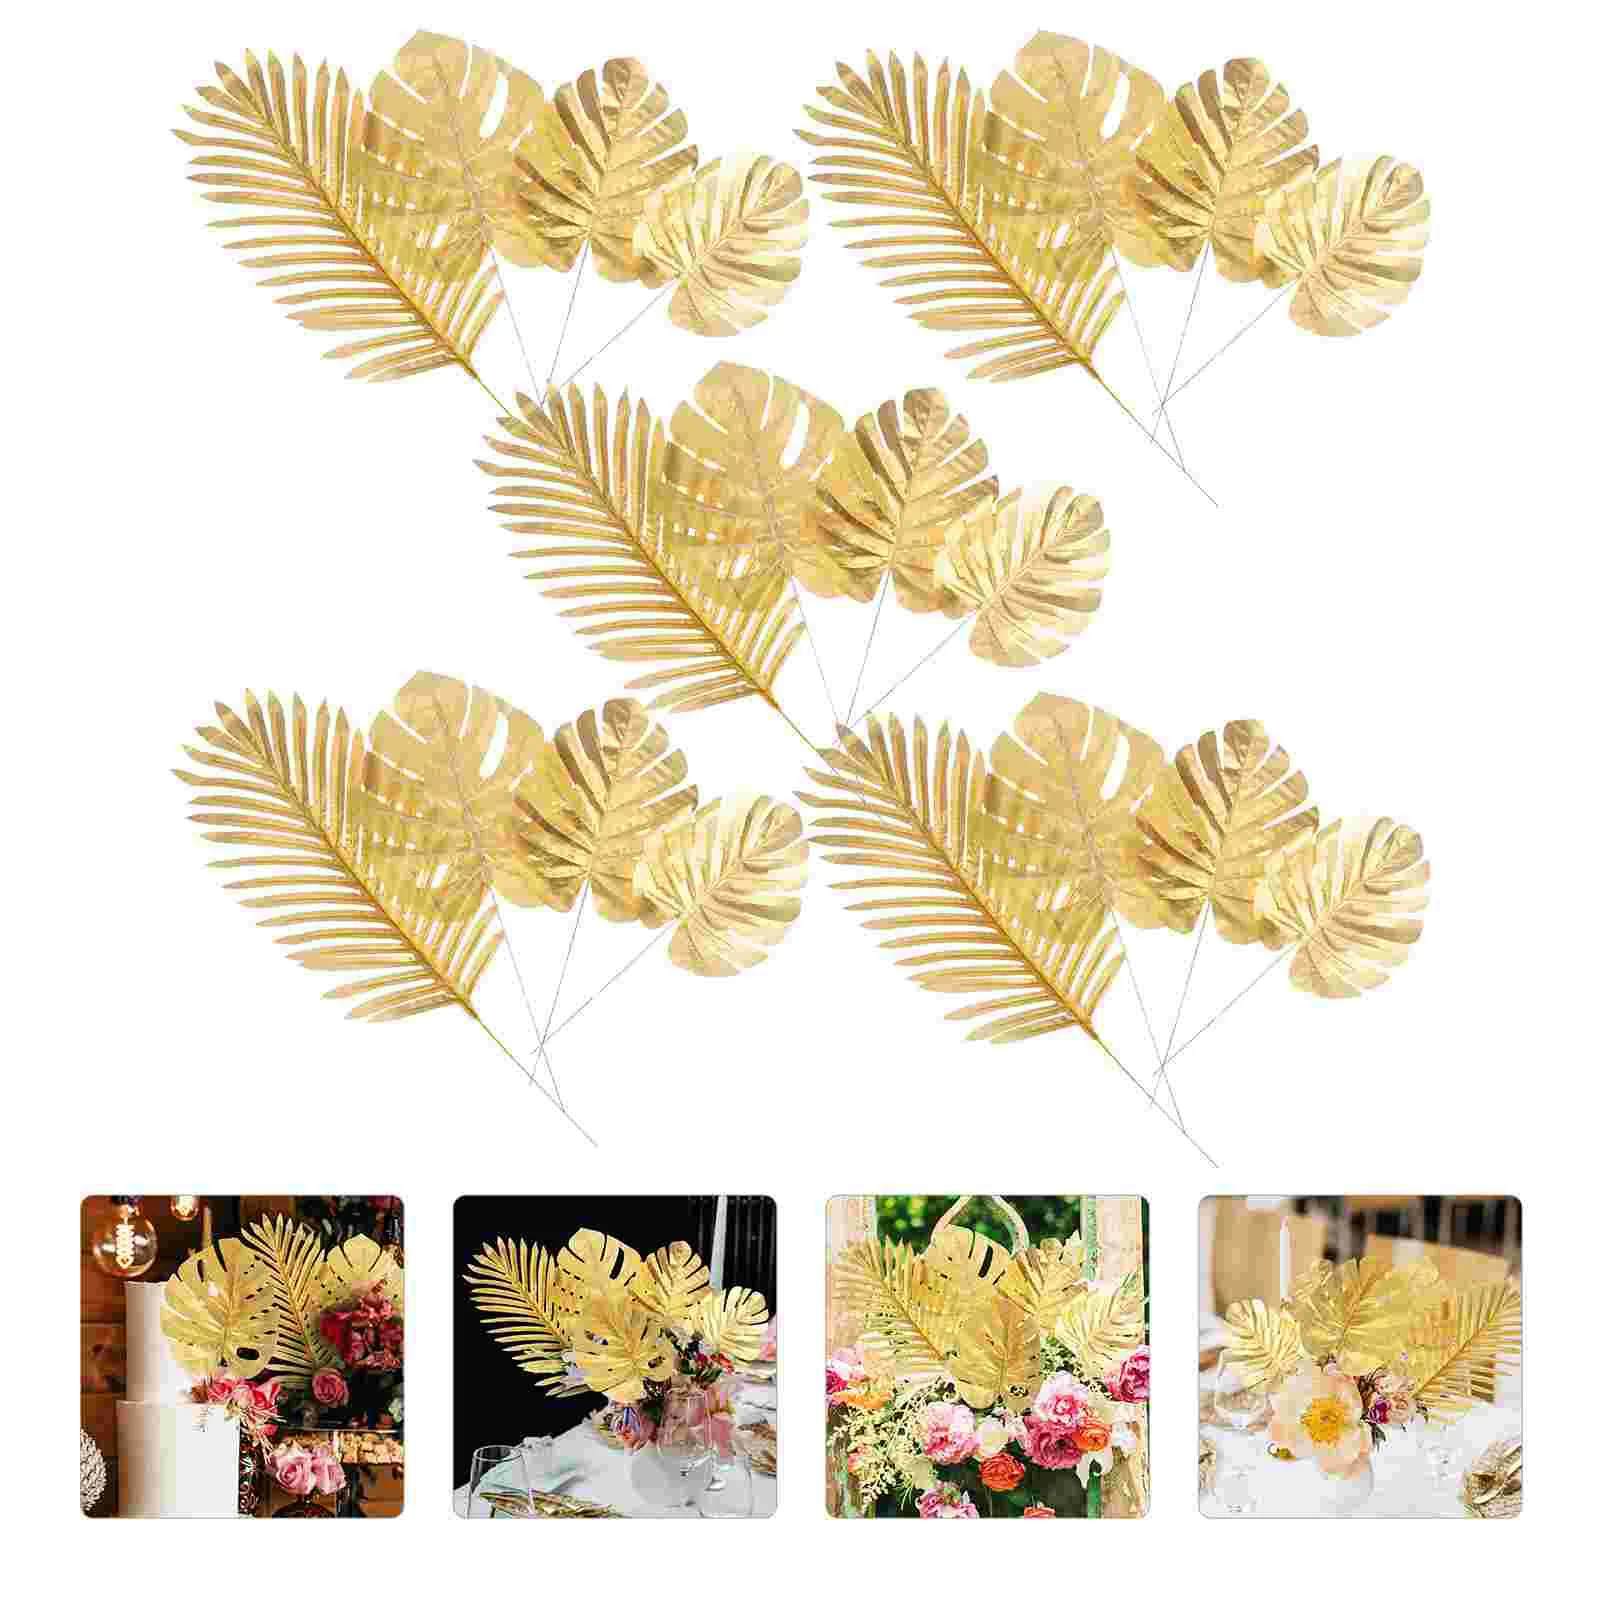 

20 Pcs Artificial Leaves Golden Monstera Leaf Wedding Decoration Party Decors Supplies Palm